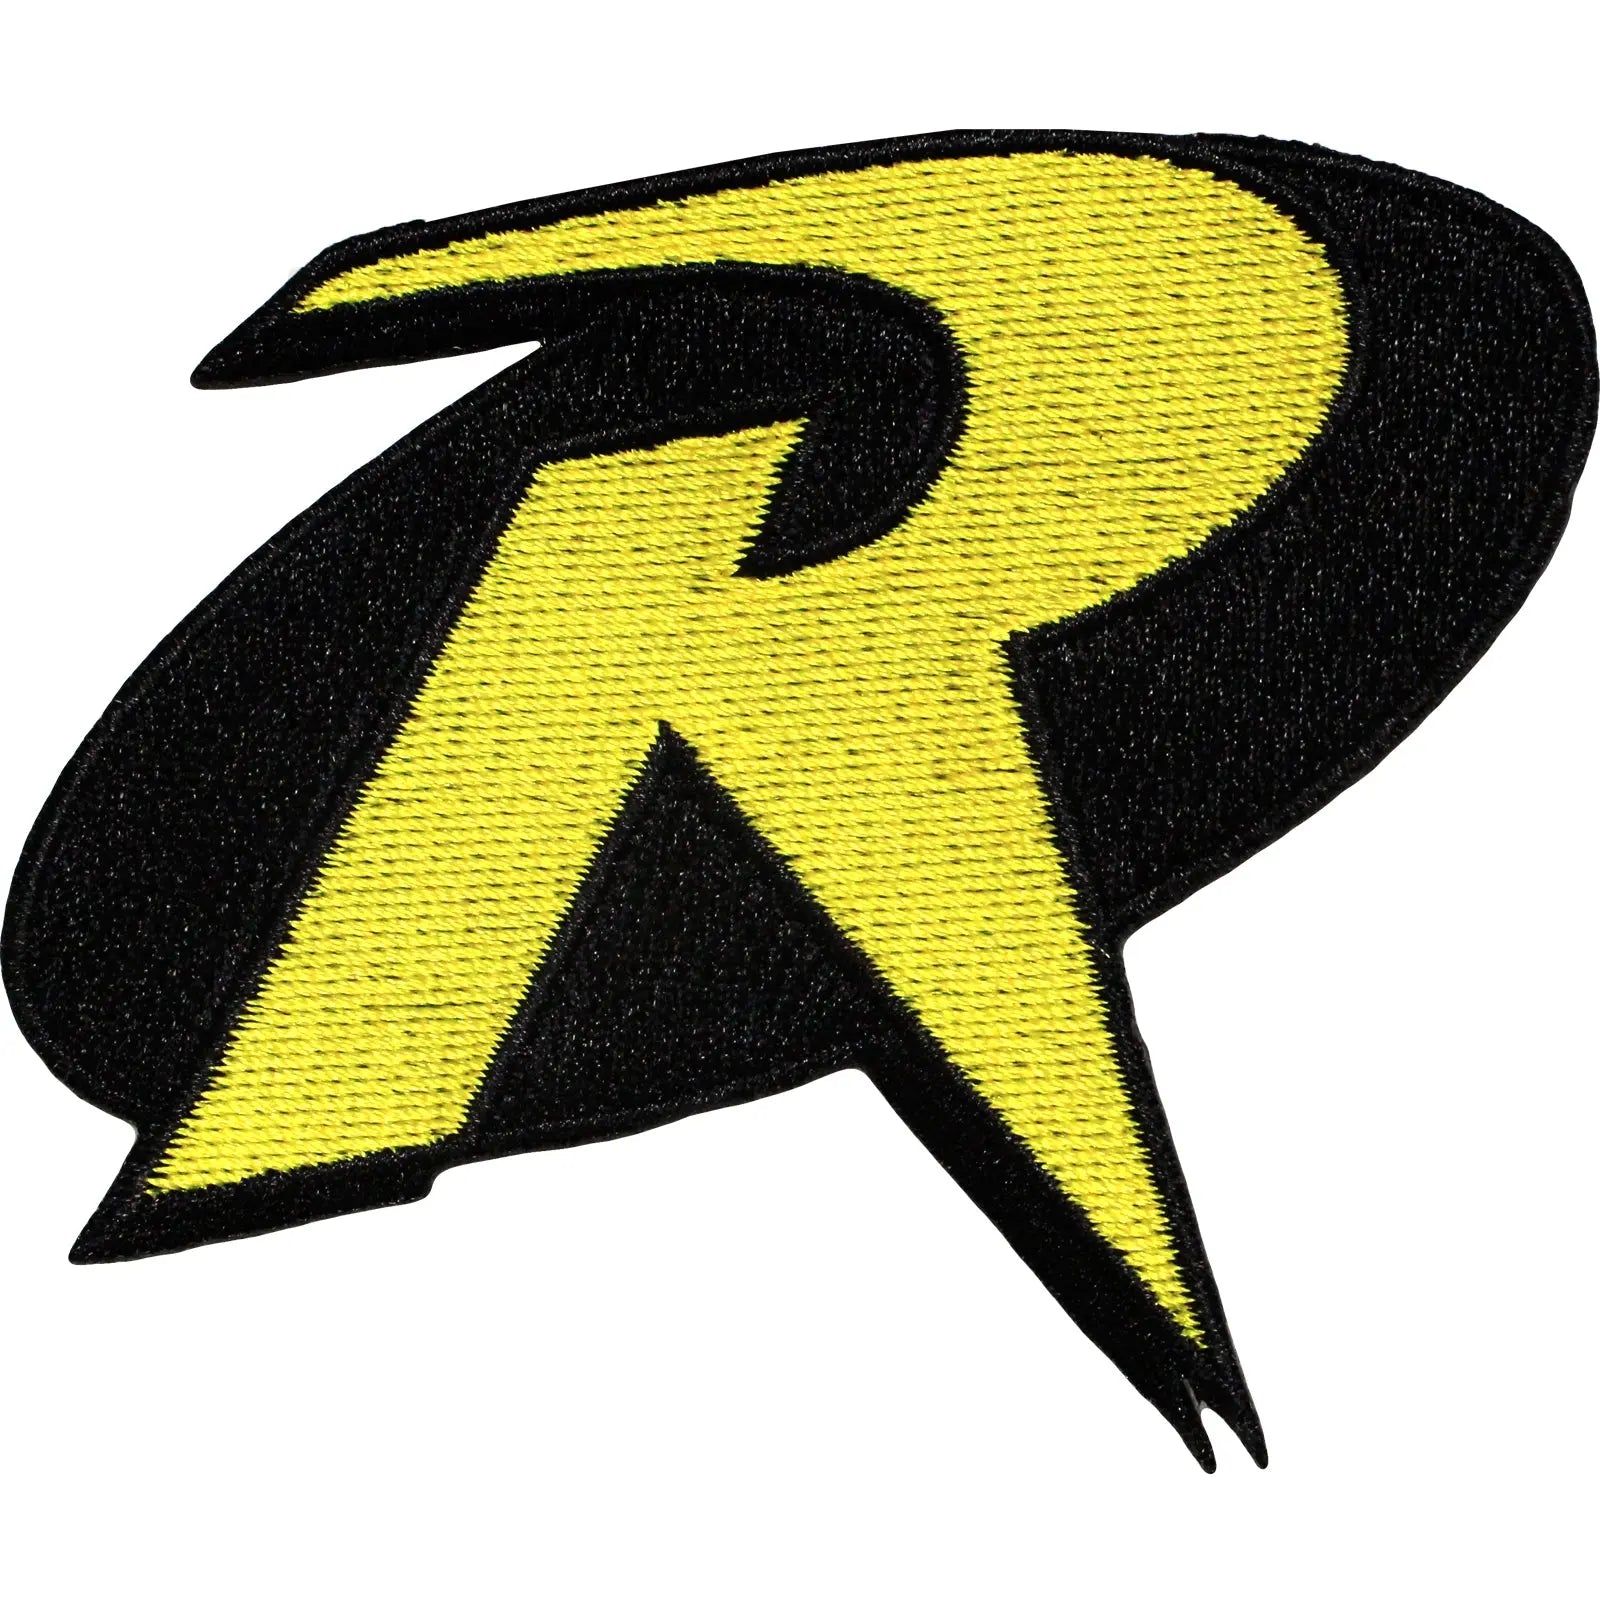 teen titans robin logo